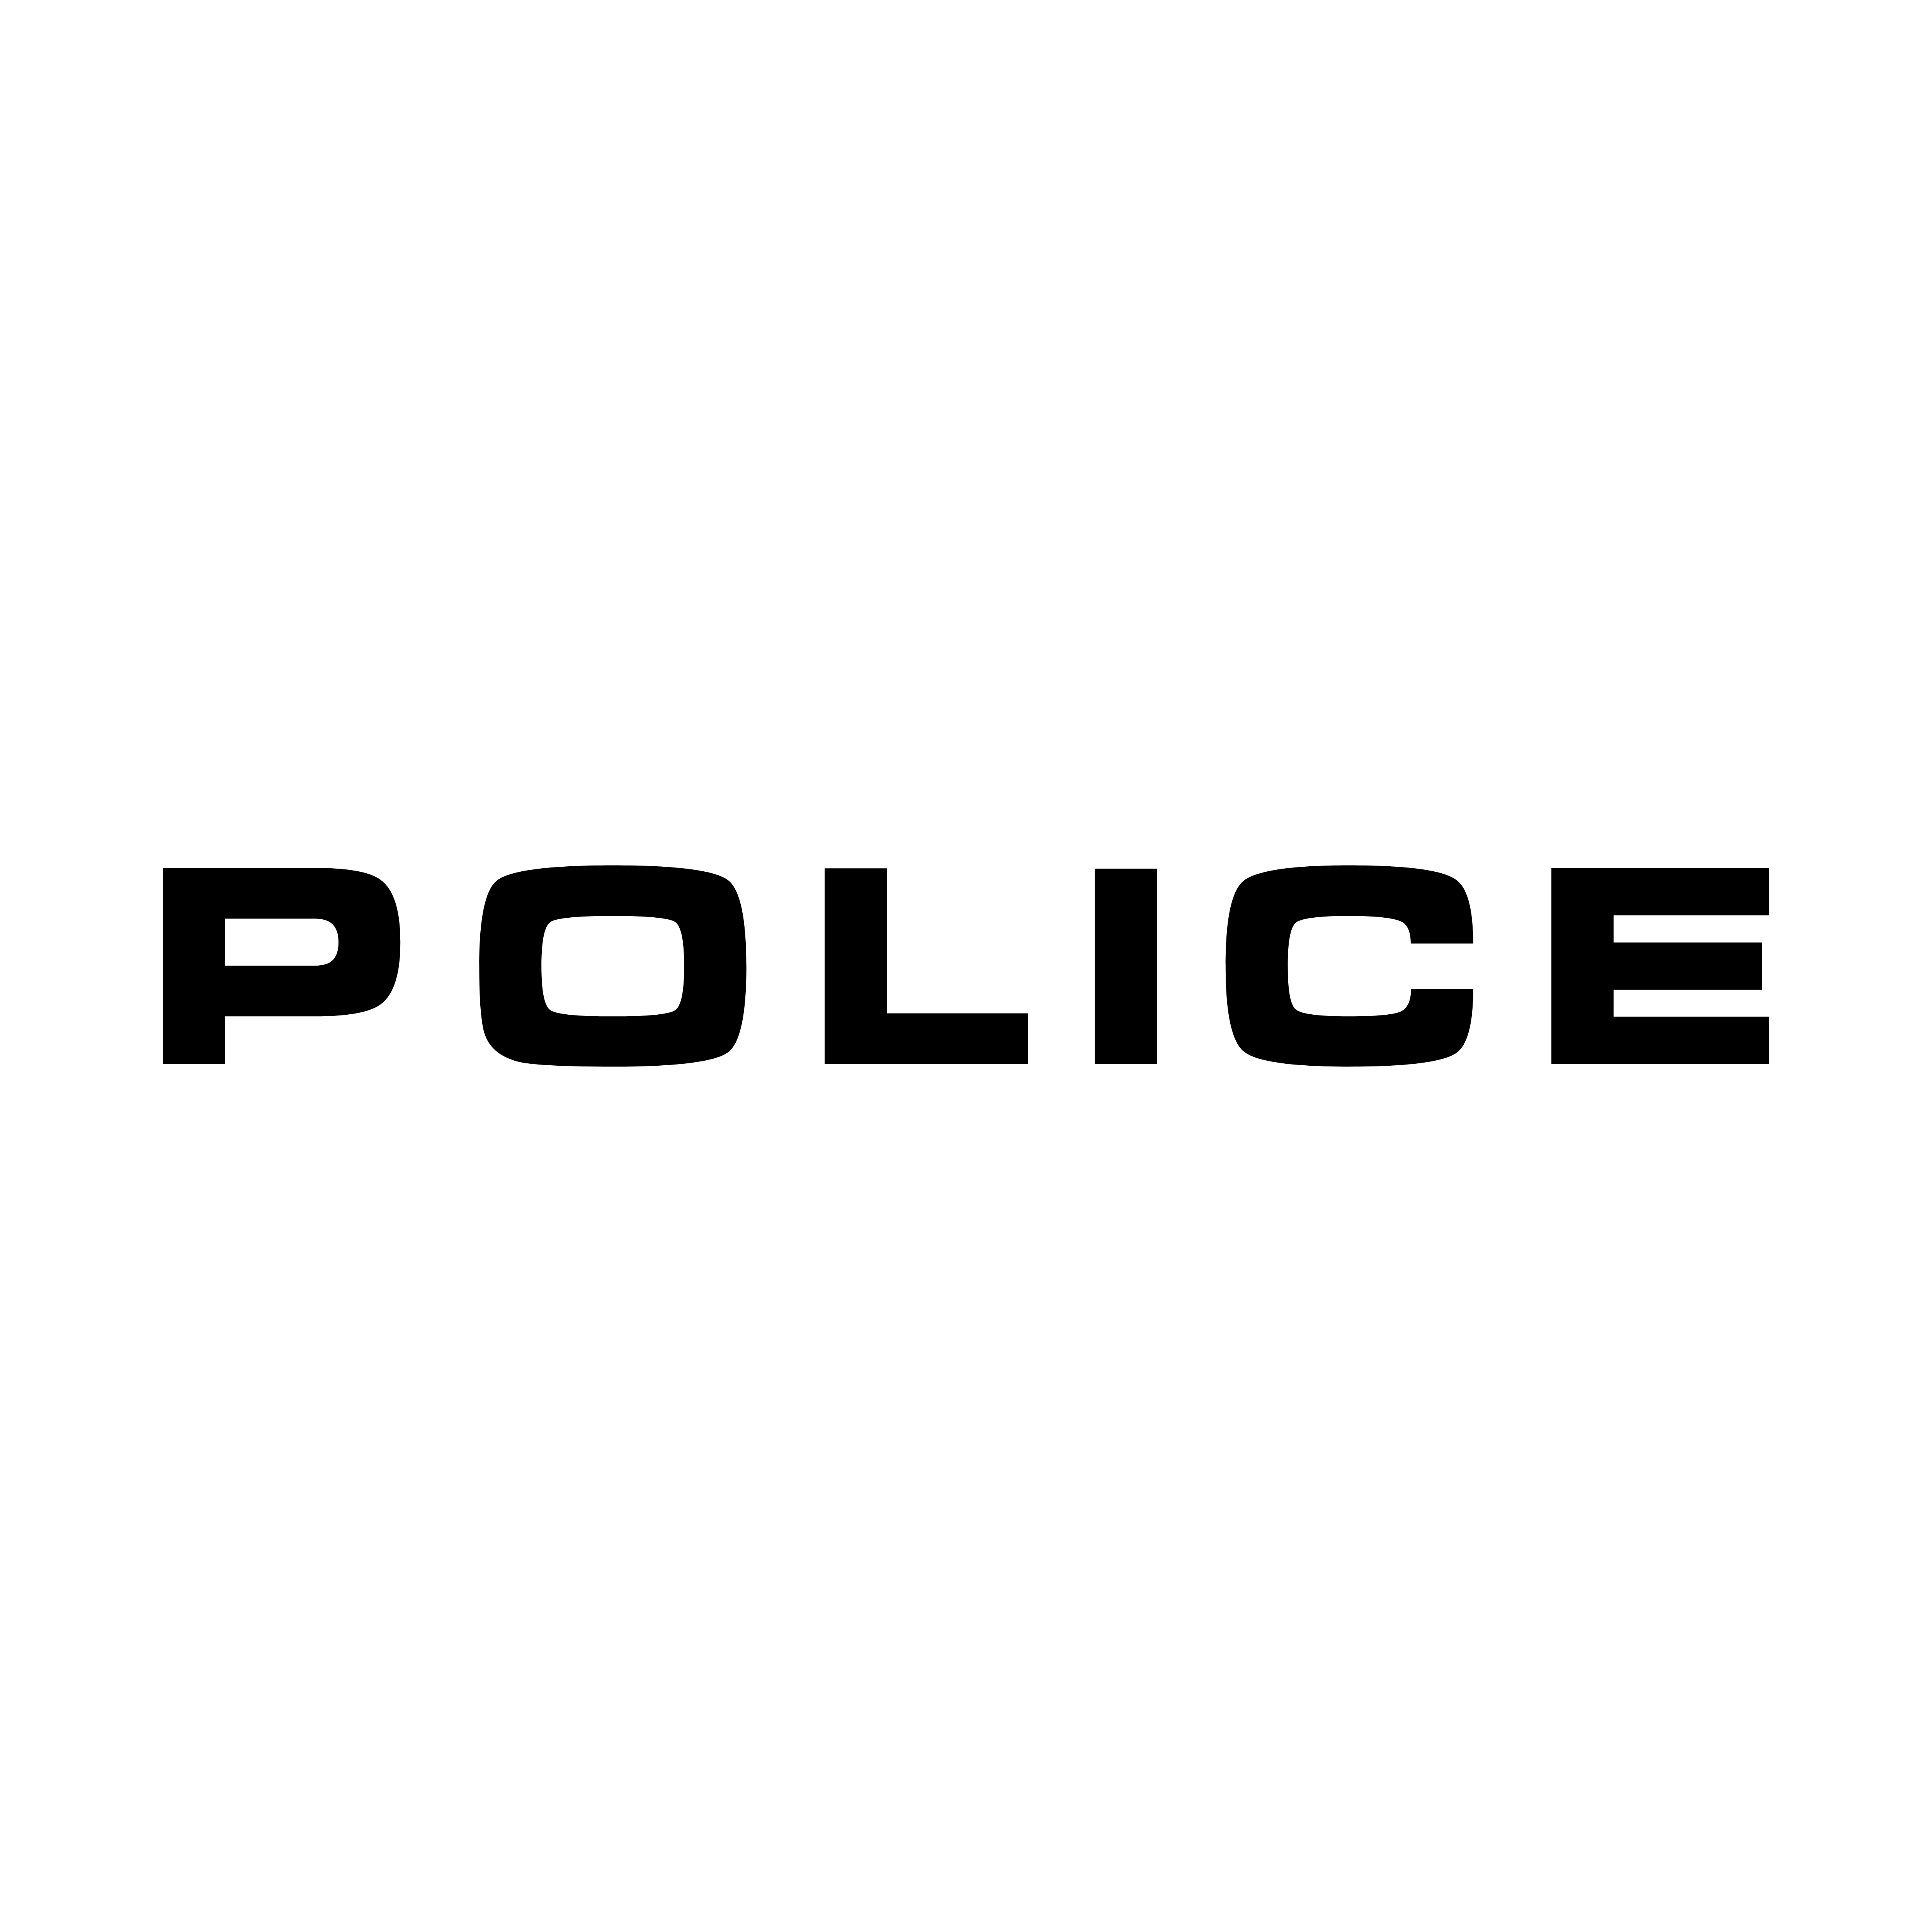 Police Logo - Police – Logos Download